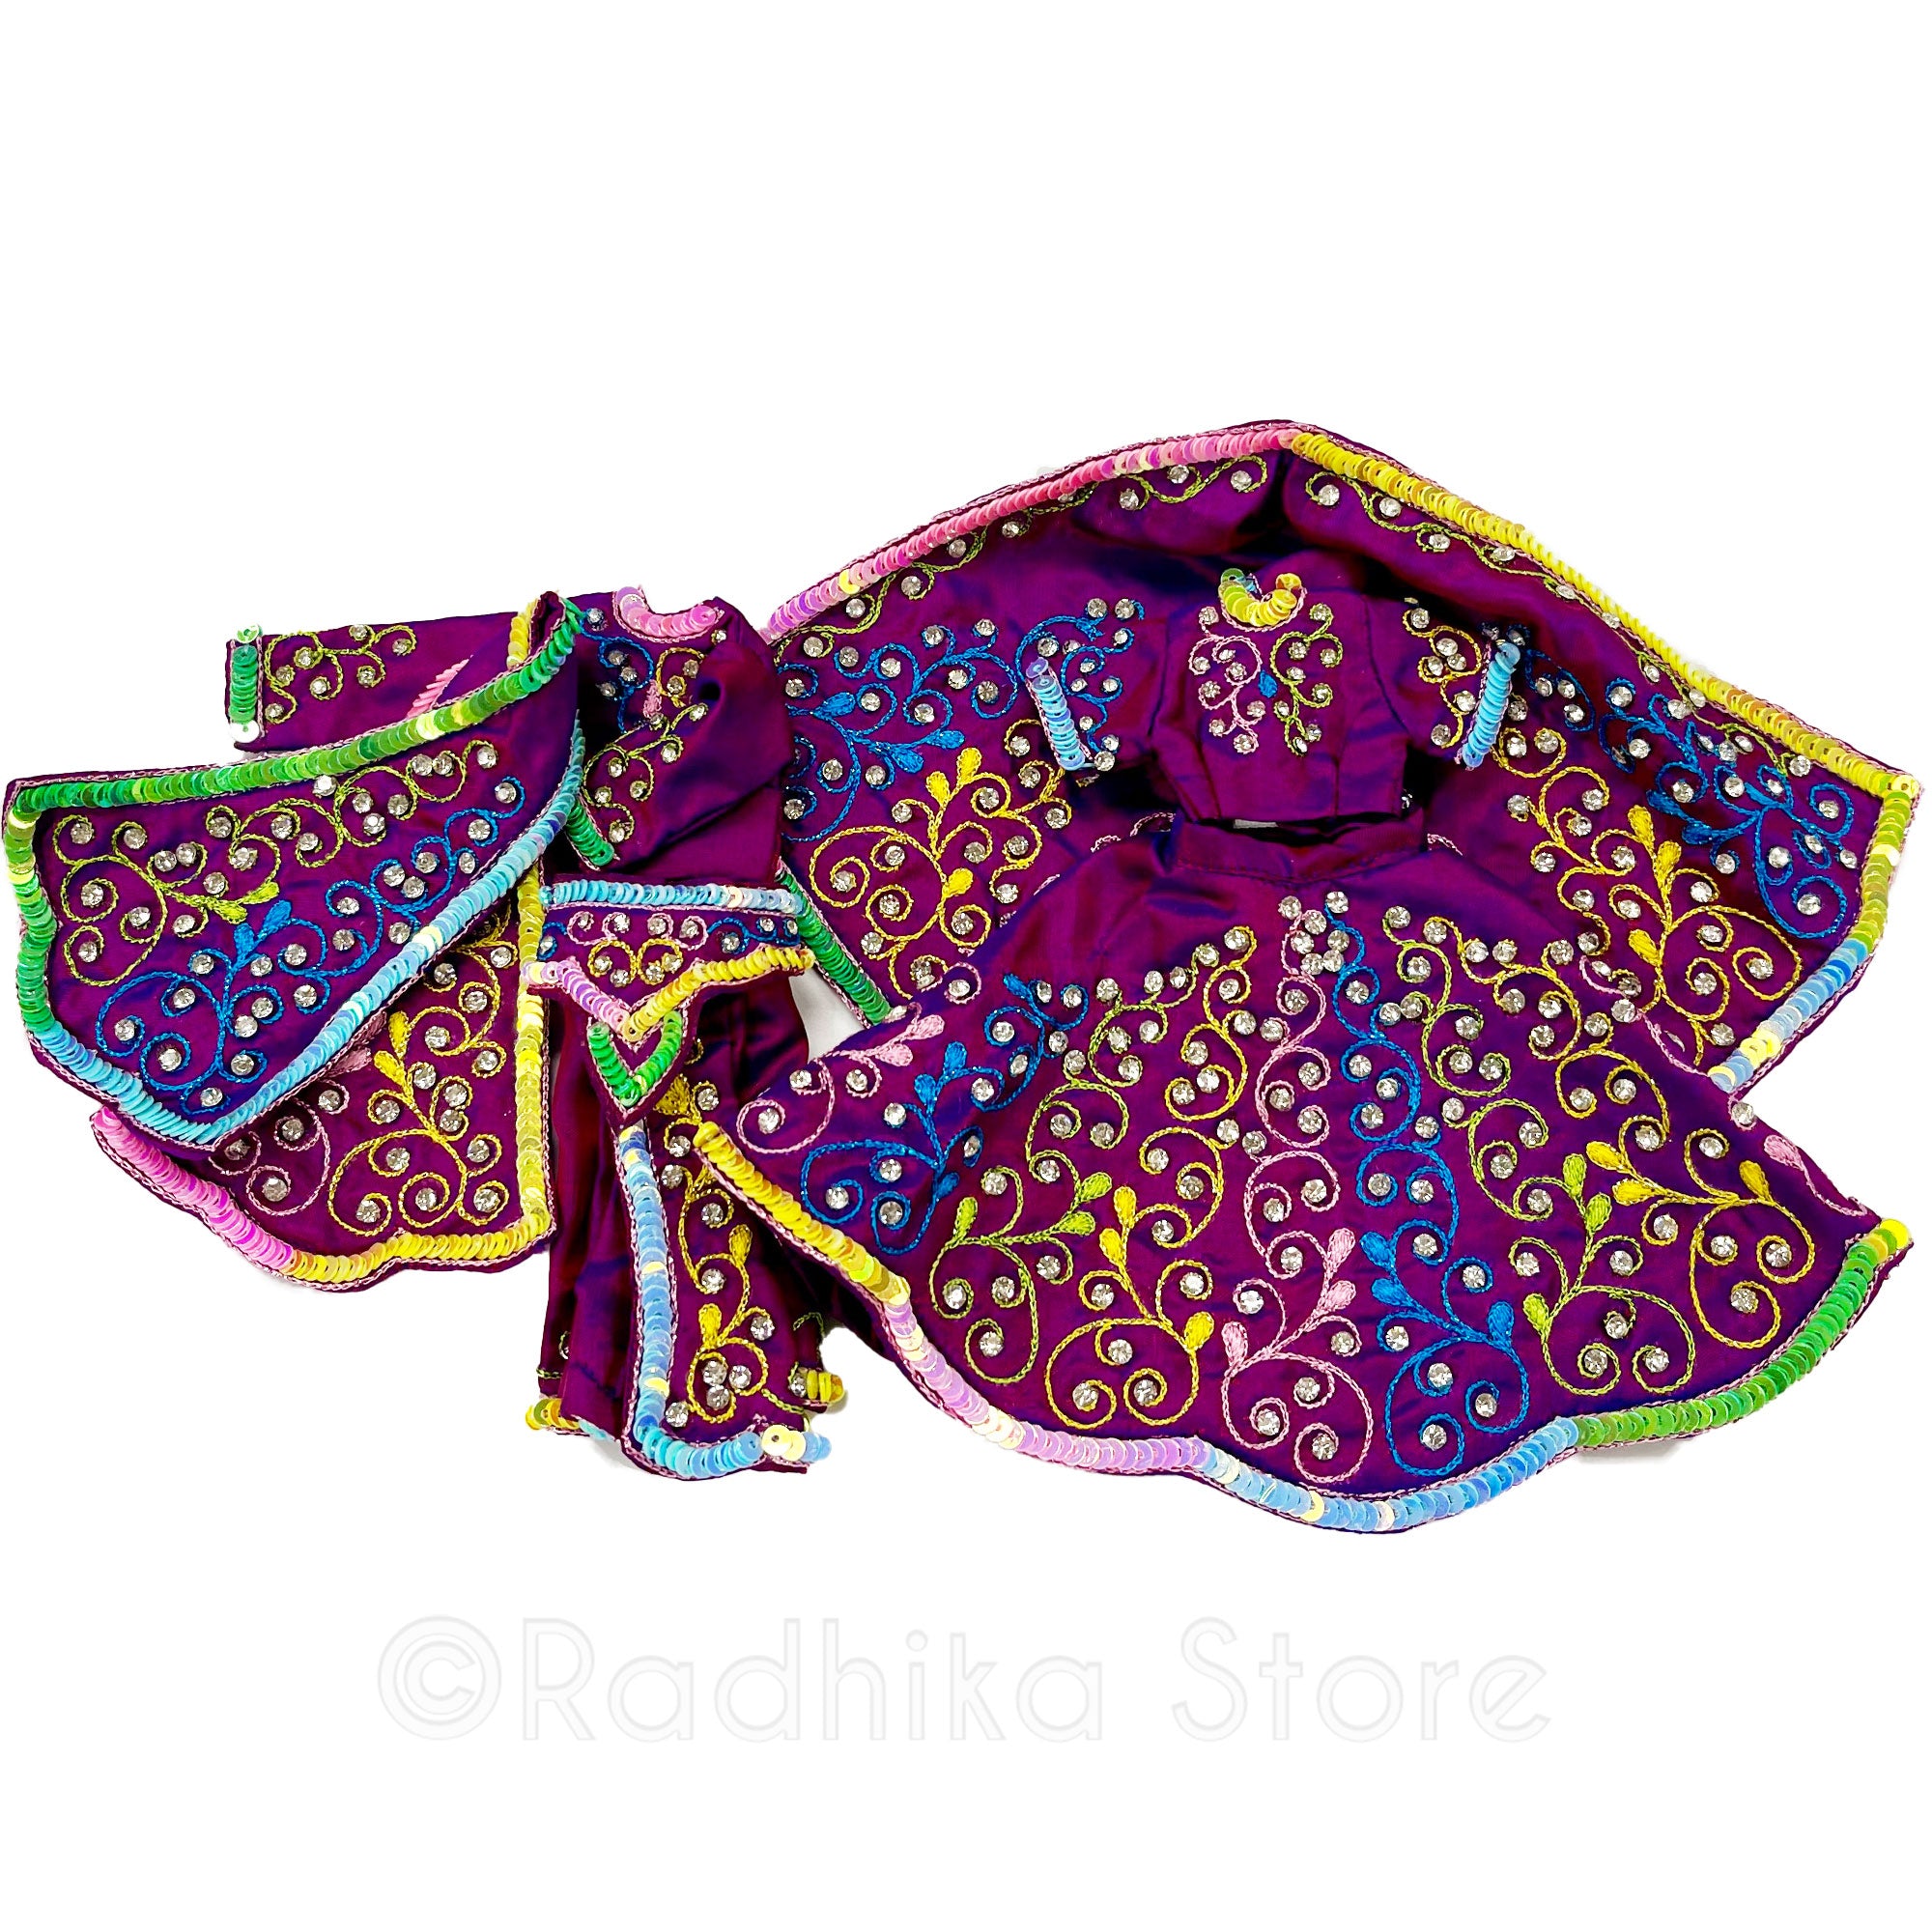 Transcendental Fireworks - All Silk - Purple - Radha Krishna Deity Outfit